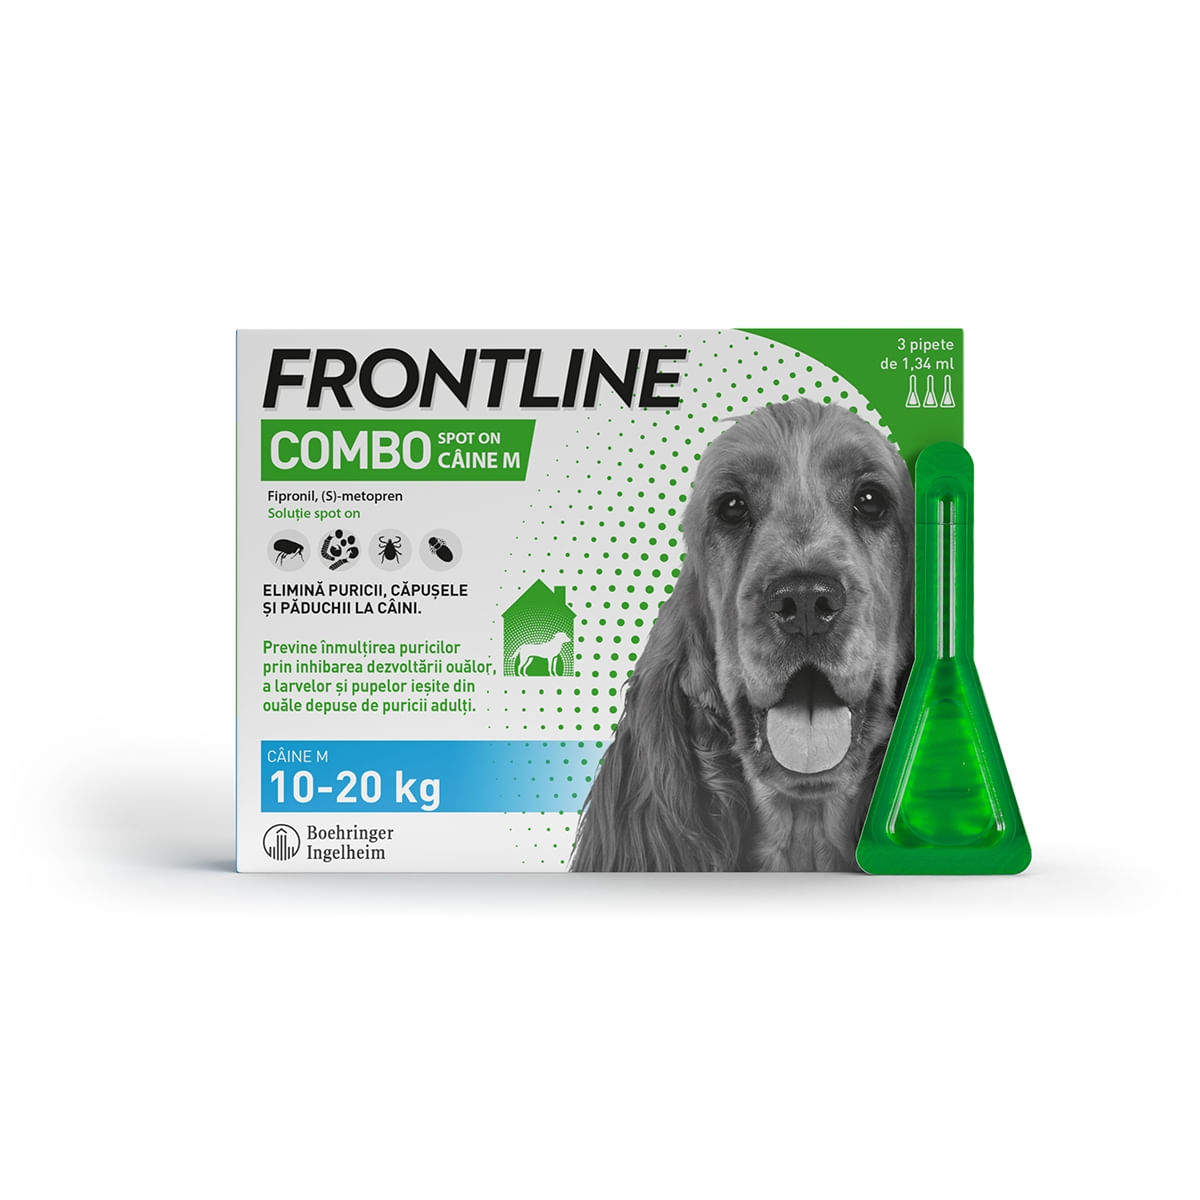 Frontline Combo, soluție spot-on antiparazitara, caini FRONTLINE Combo, spot-on, soluție antiparazitară, câini 10-20kg, 3 pipete